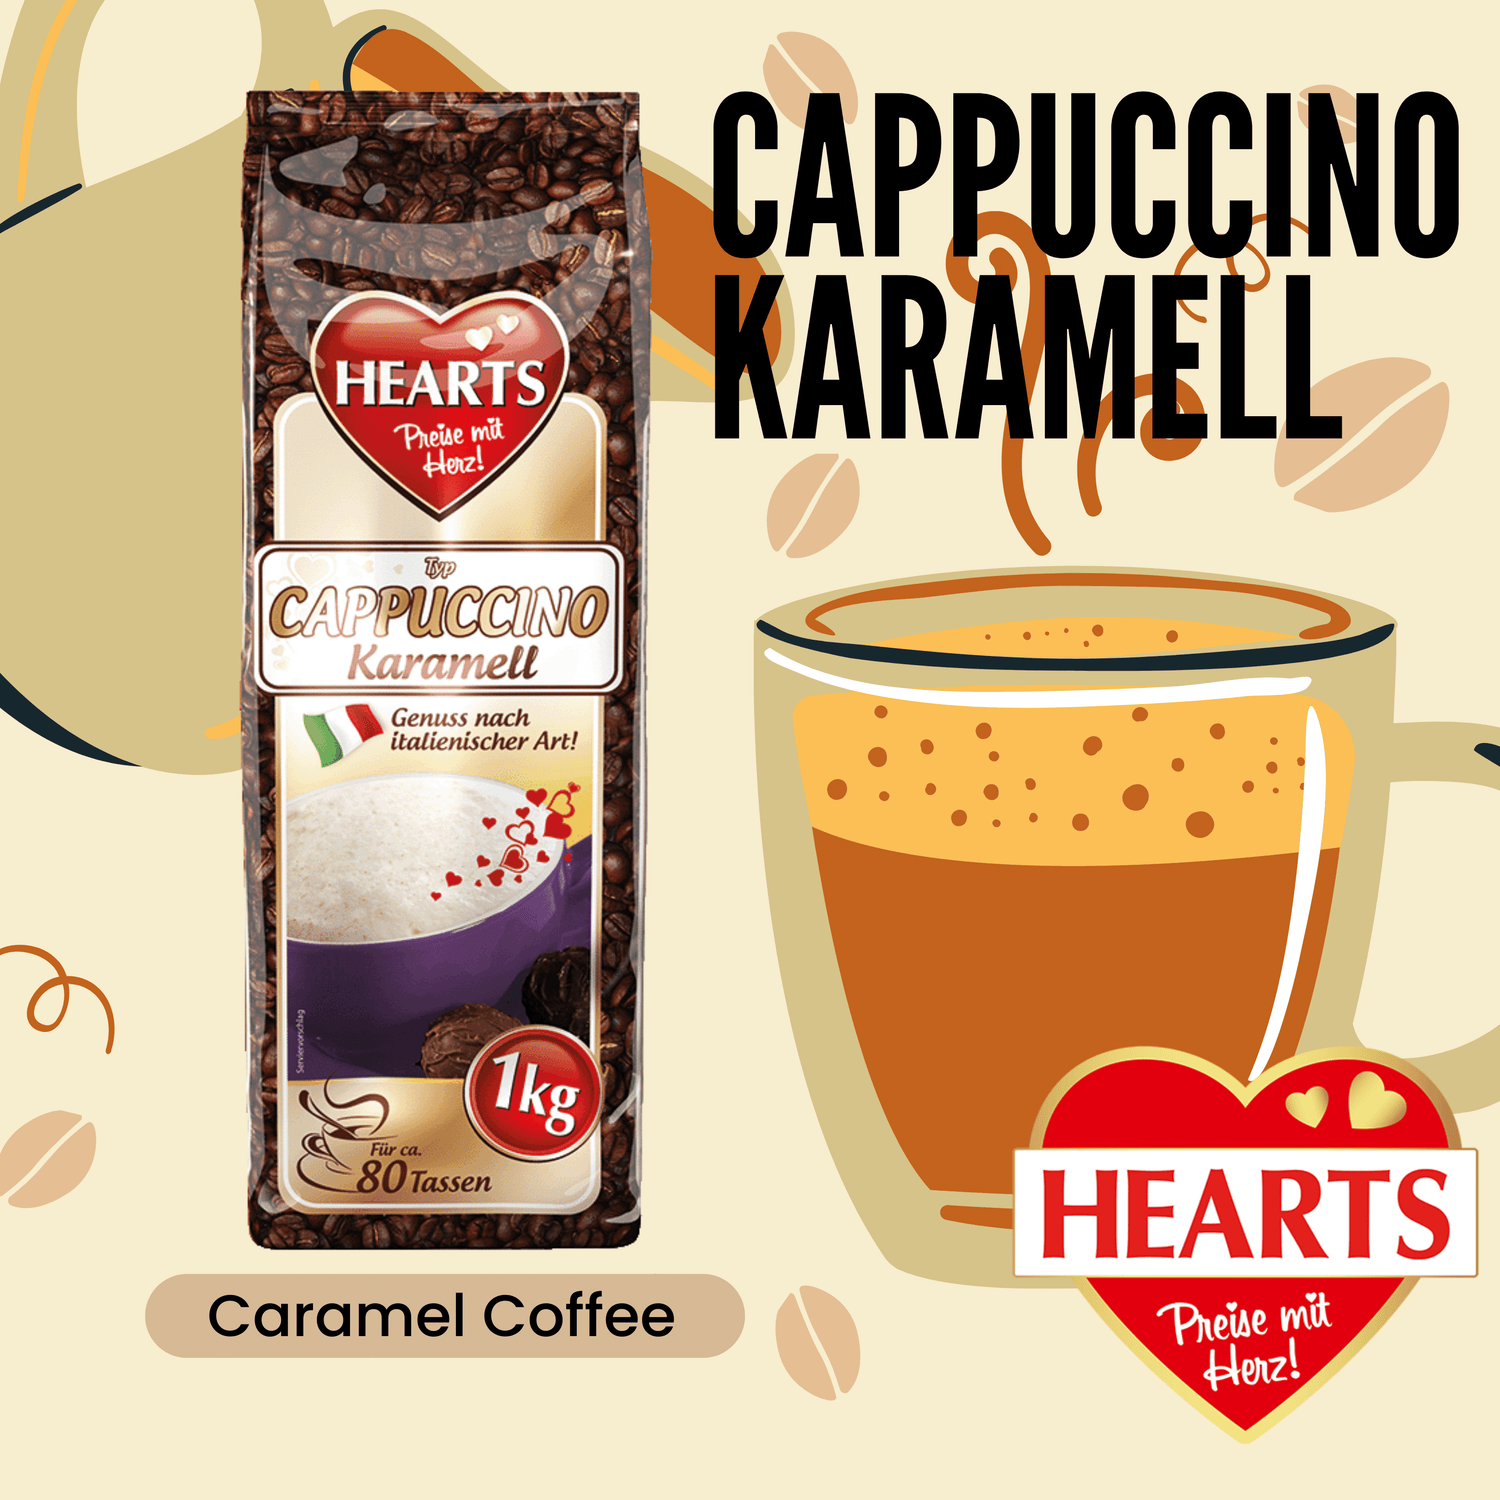 HEARTS Cappuccino Karamell im Zehnerpack als Vorrat!